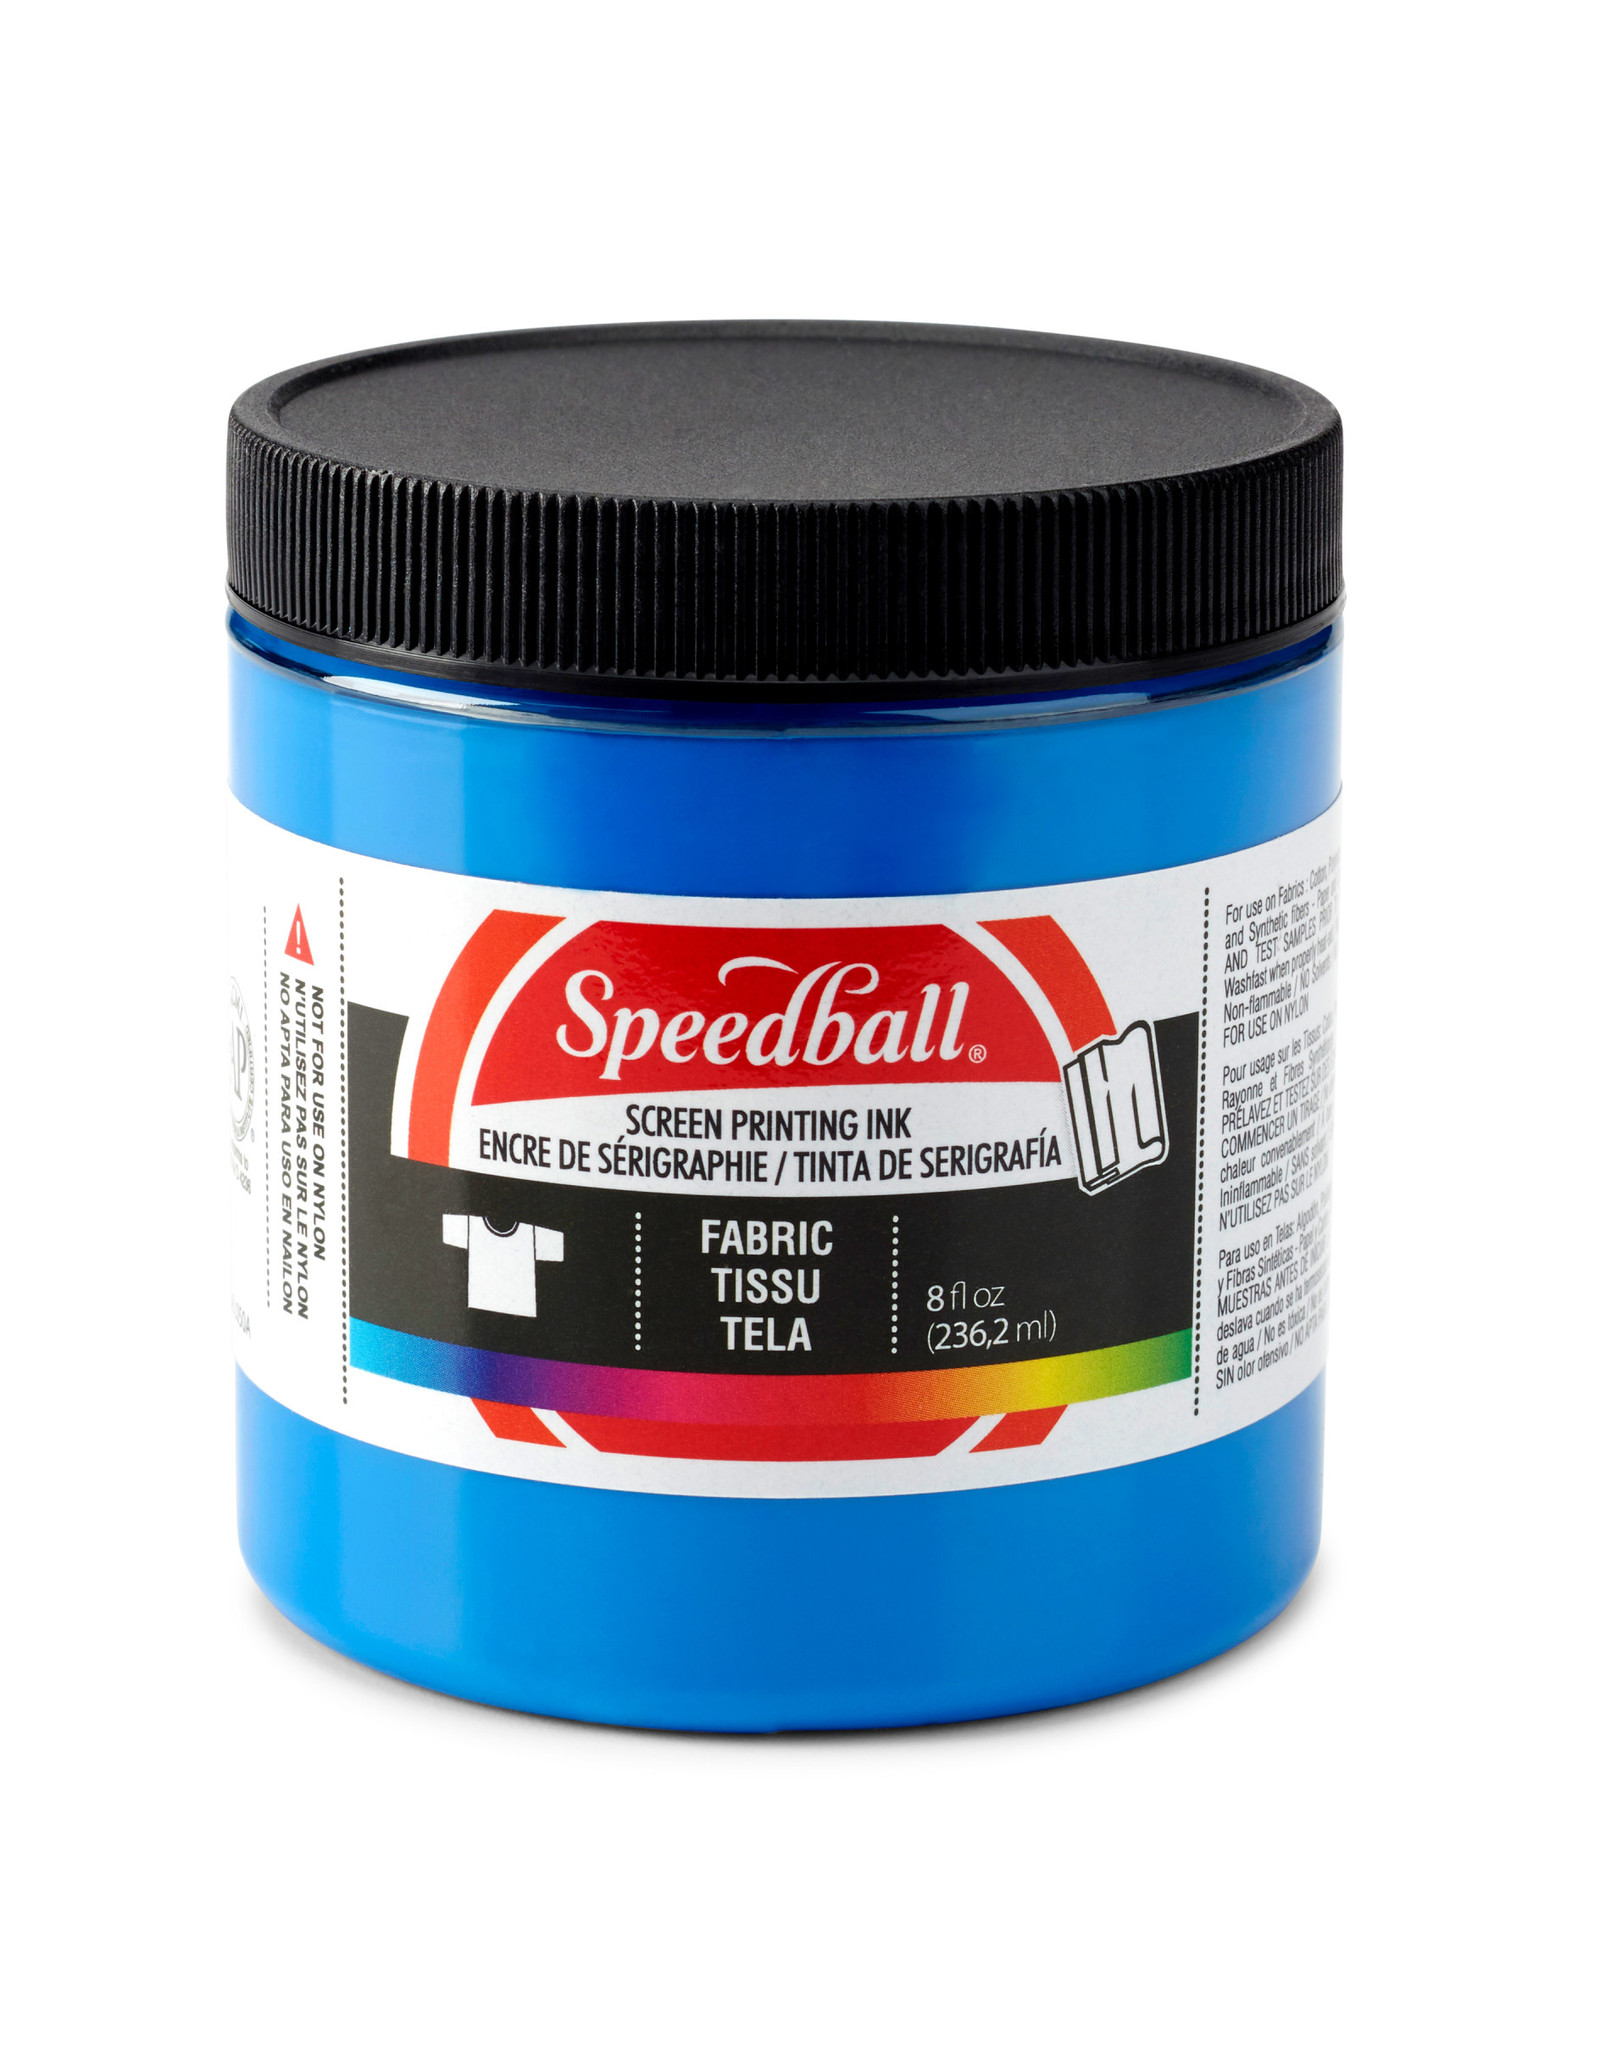 SPEEDBALL ART PRODUCTS Speedball Fabric Screen Printing Ink, Blue, 8oz